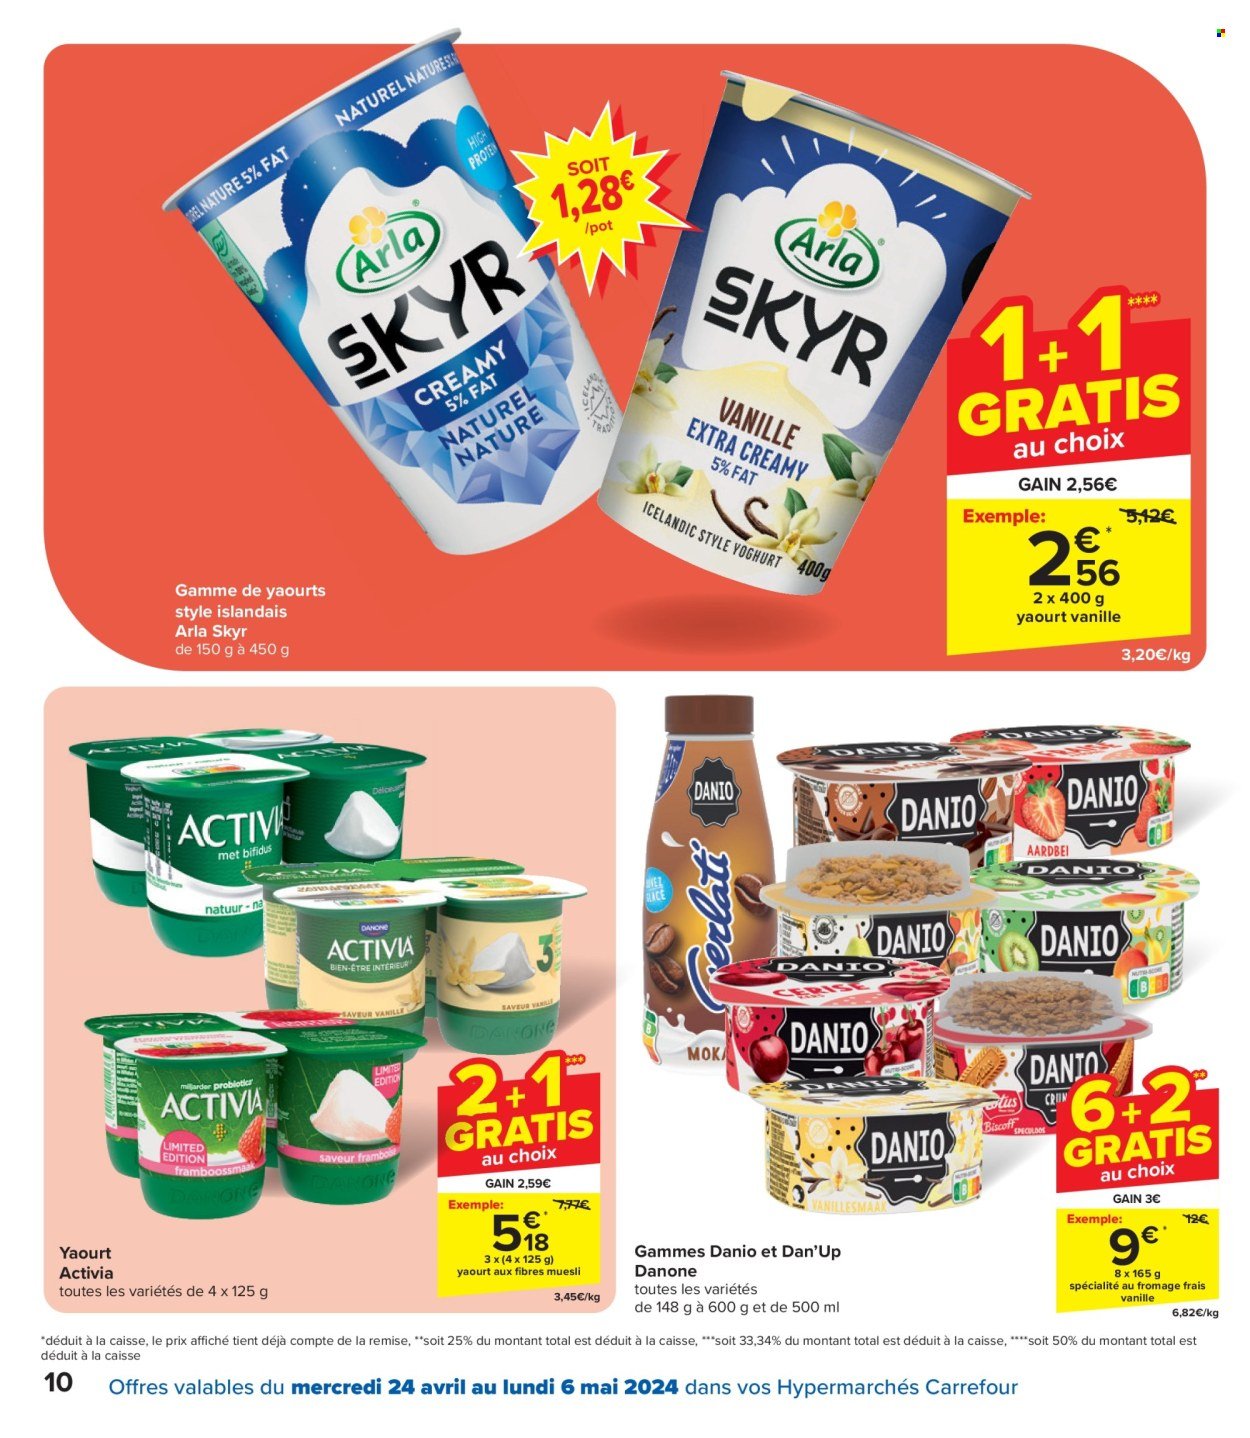 thumbnail - Catalogue Carrefour hypermarkt - 24/04/2024 - 06/05/2024 - Produits soldés - yaourt, Danone, skyr, müsli, Activia. Page 10.